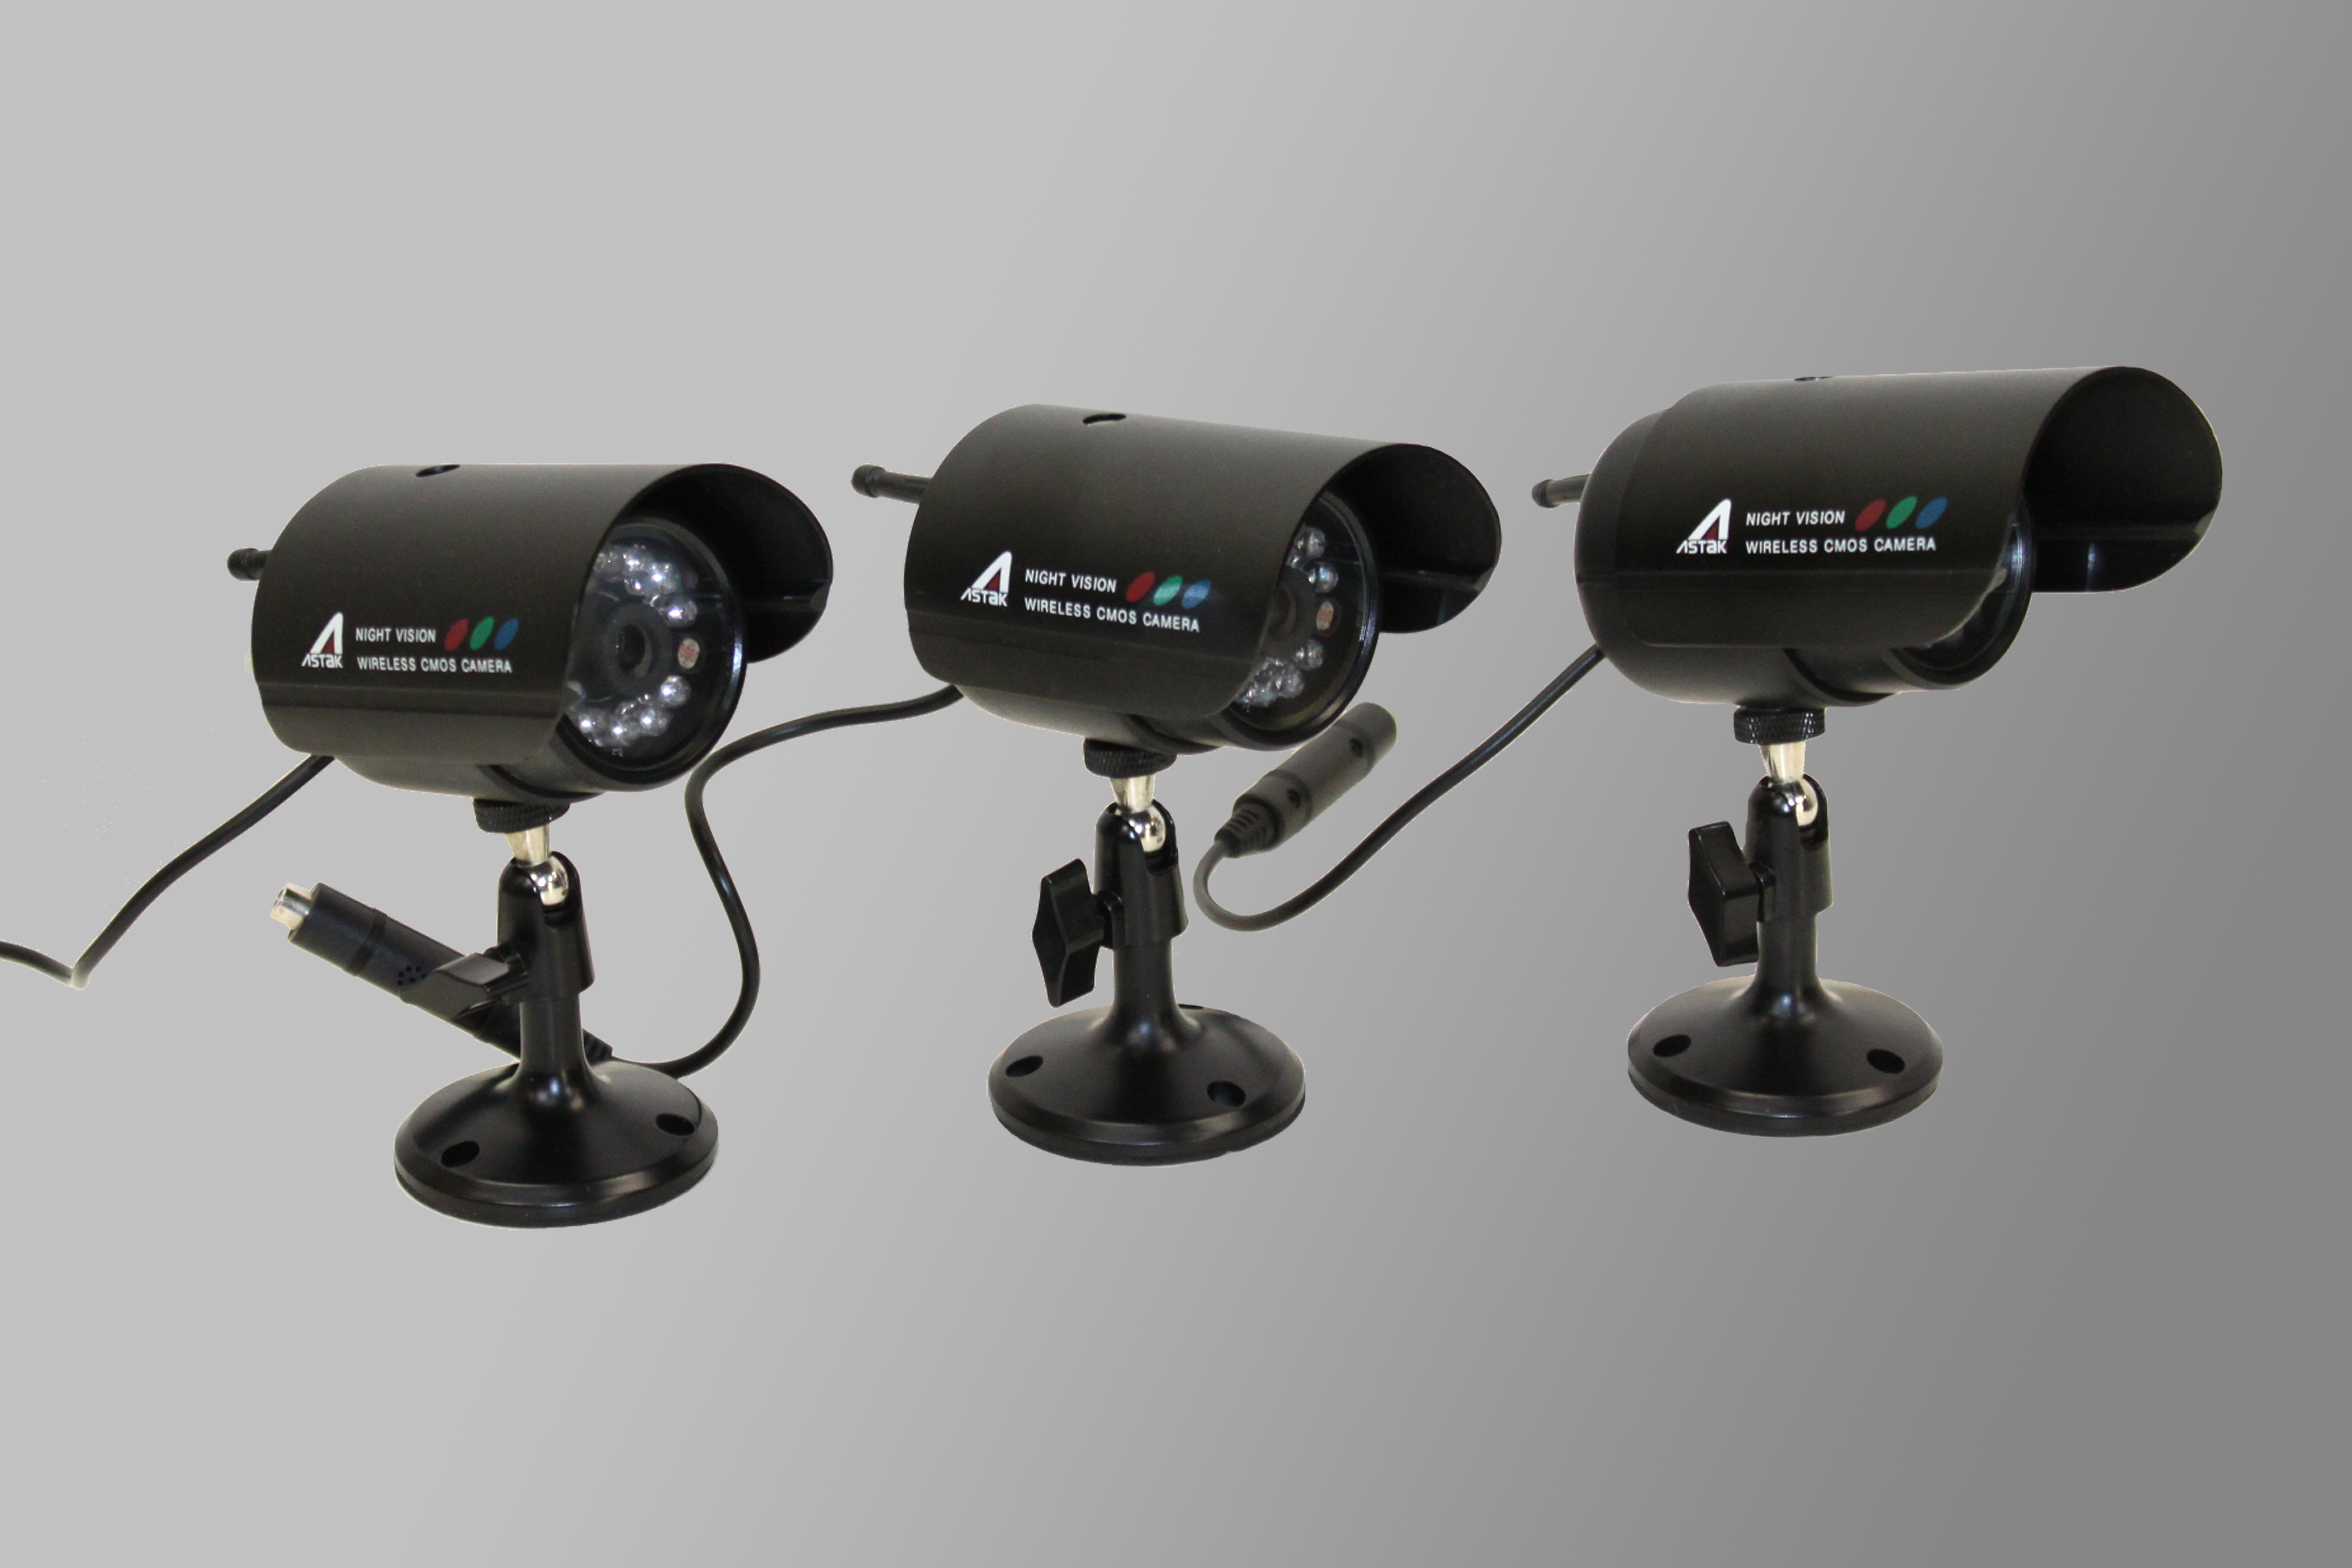 Astak CM-818T Surveillance Cameras | Inter Video 24 Frame Playback and